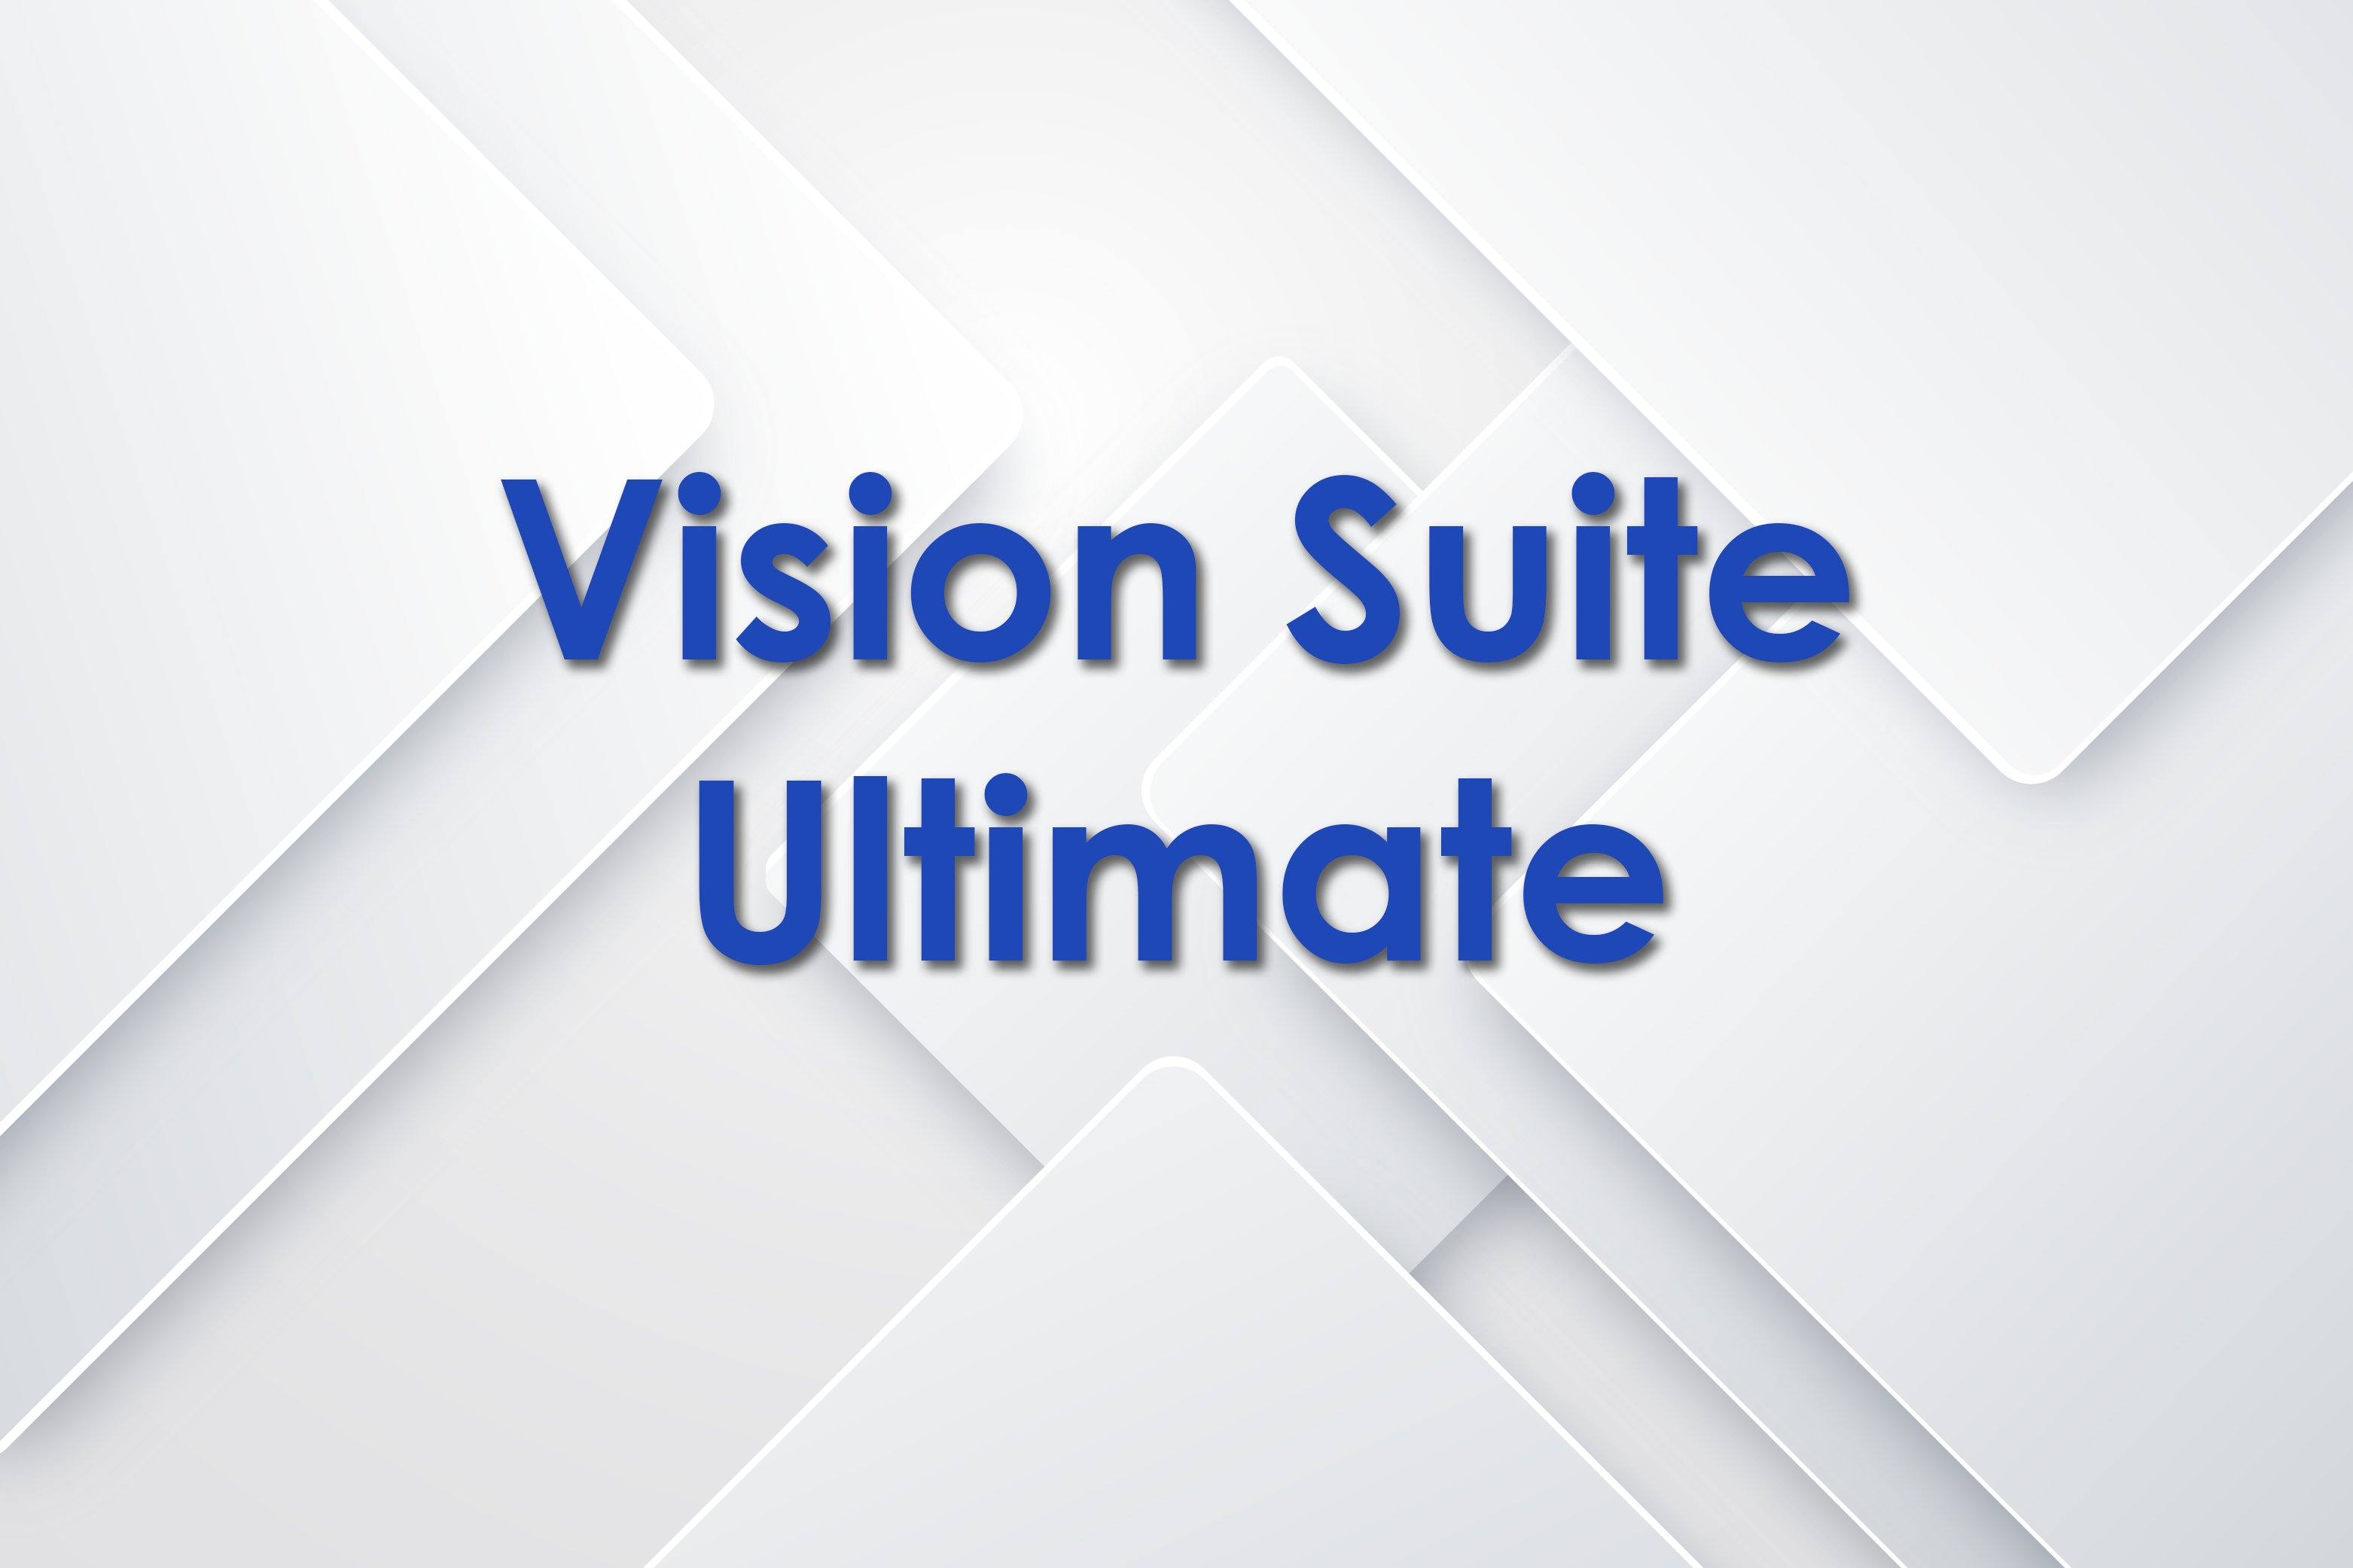 Vision Suite Ultimate